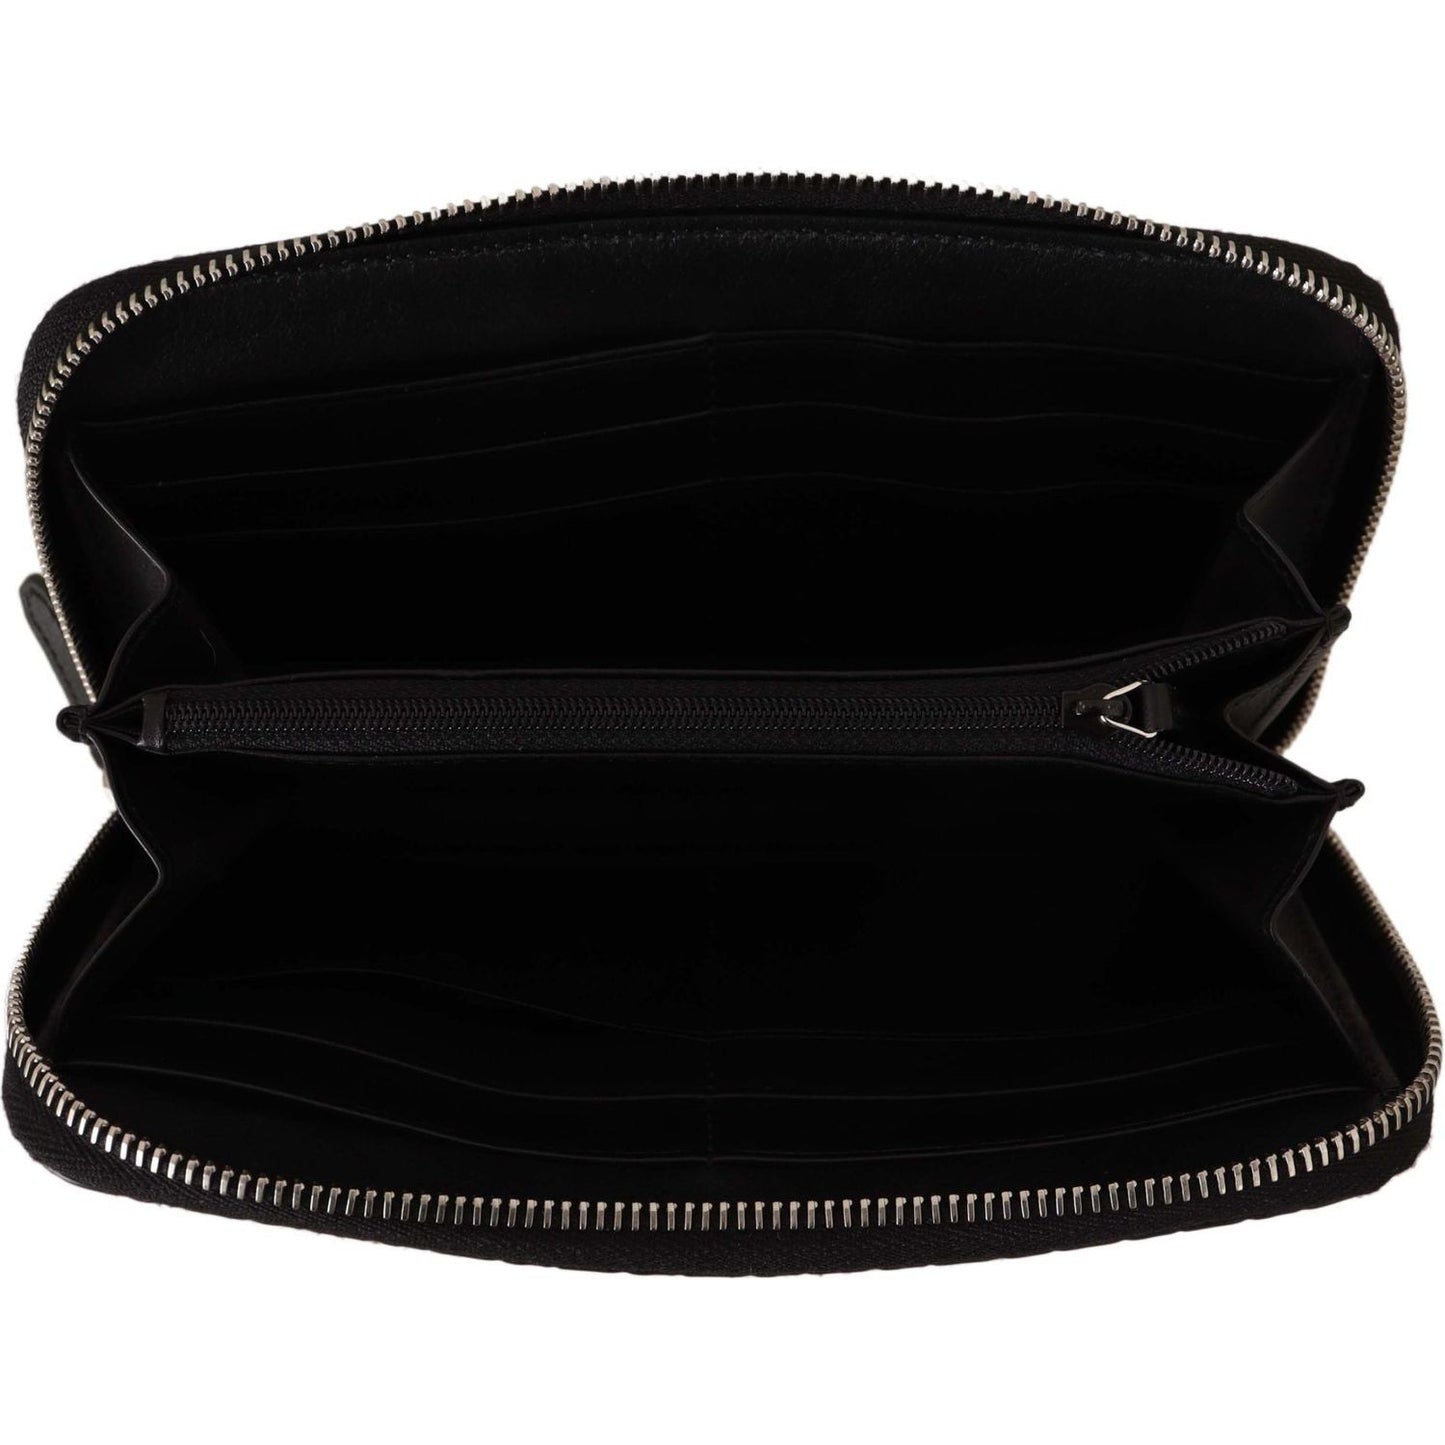 Gucci Elegant Black Leather Zip-Around Wallet black-wallet-microguccissima-leather-zipper-wallet IMG_7657-scaled-44008f3f-997.jpg